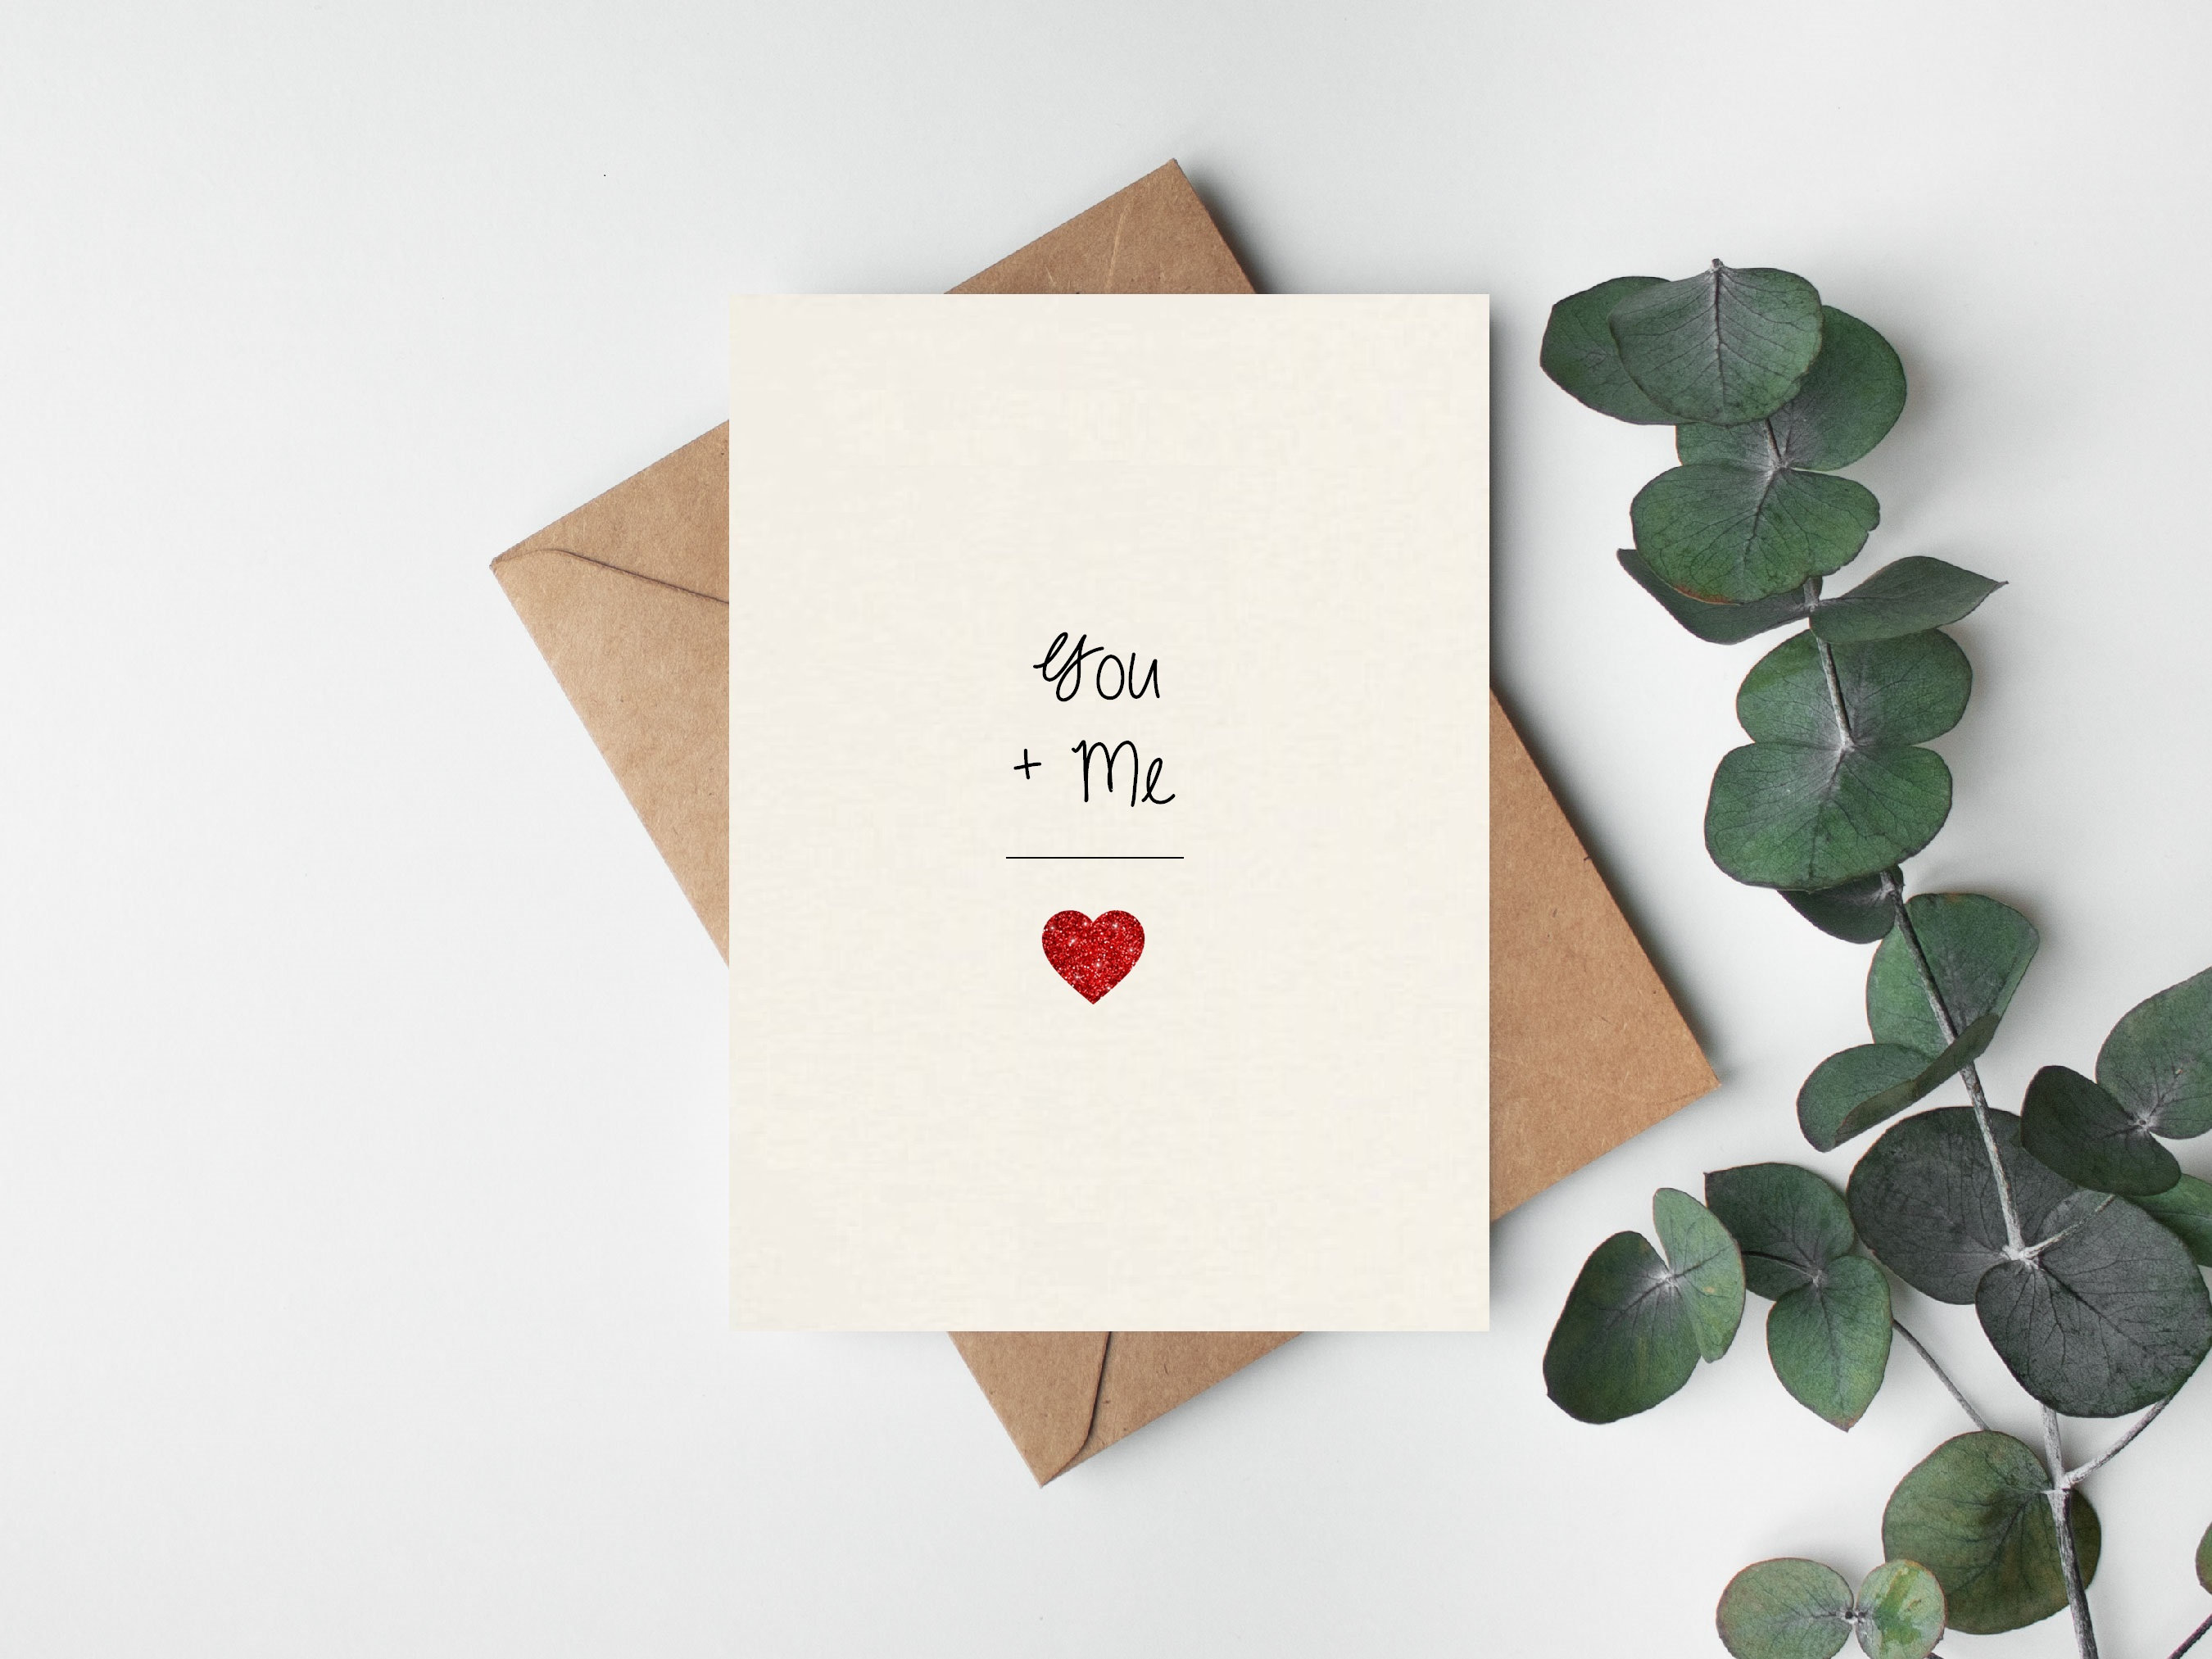 Love Kanji Greeting Card for Sale by dmitrymv13